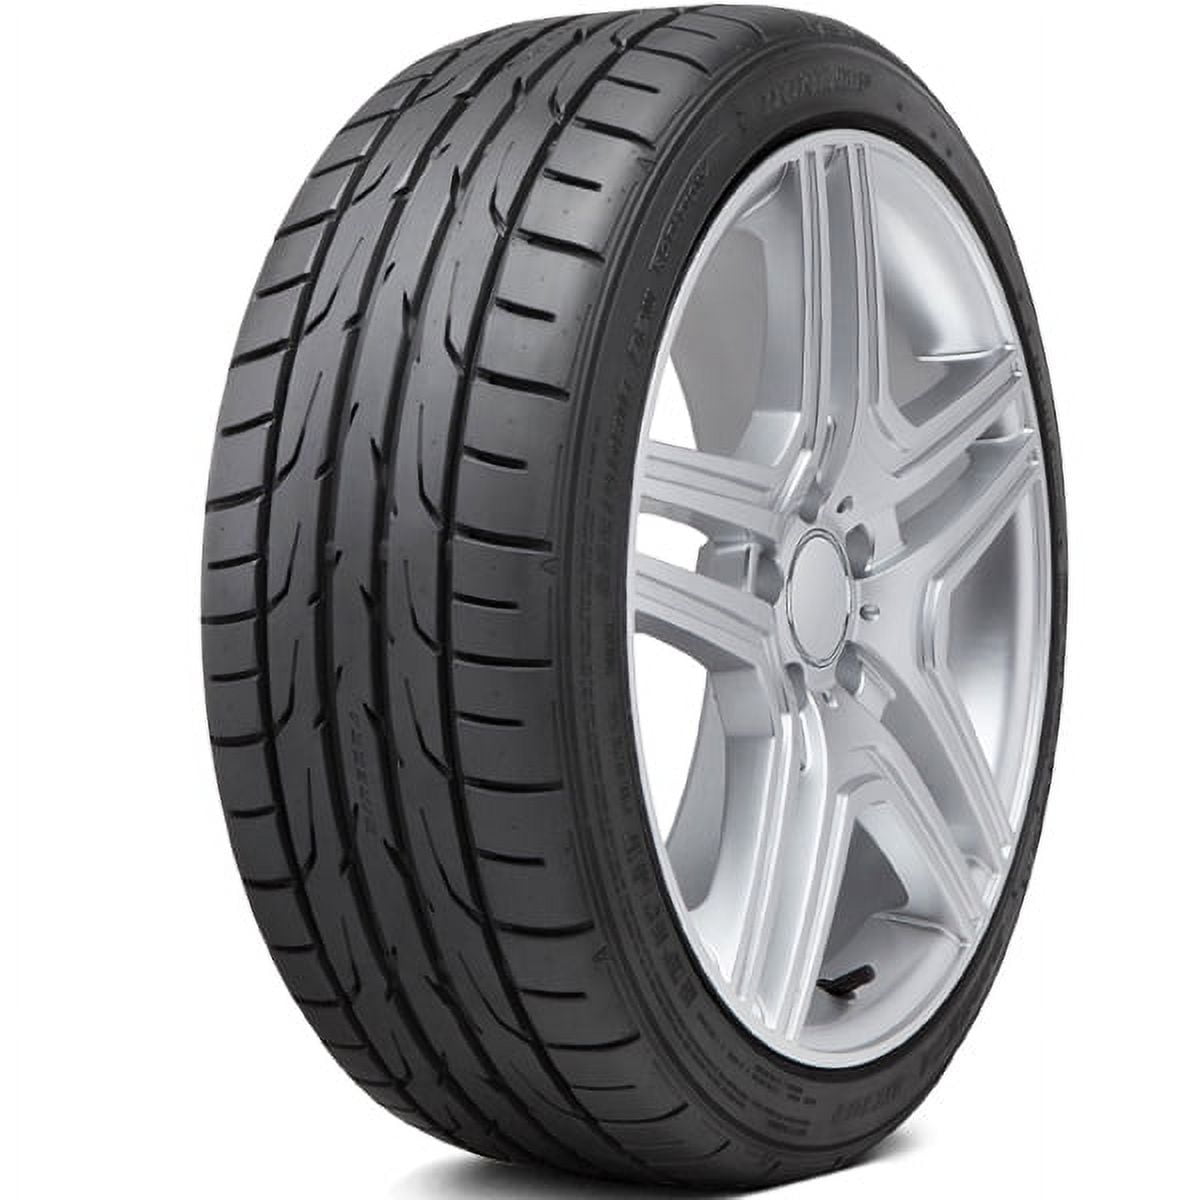 Dunlop Direzza DZ102 205/55R15 88 V Tire - Walmart.com